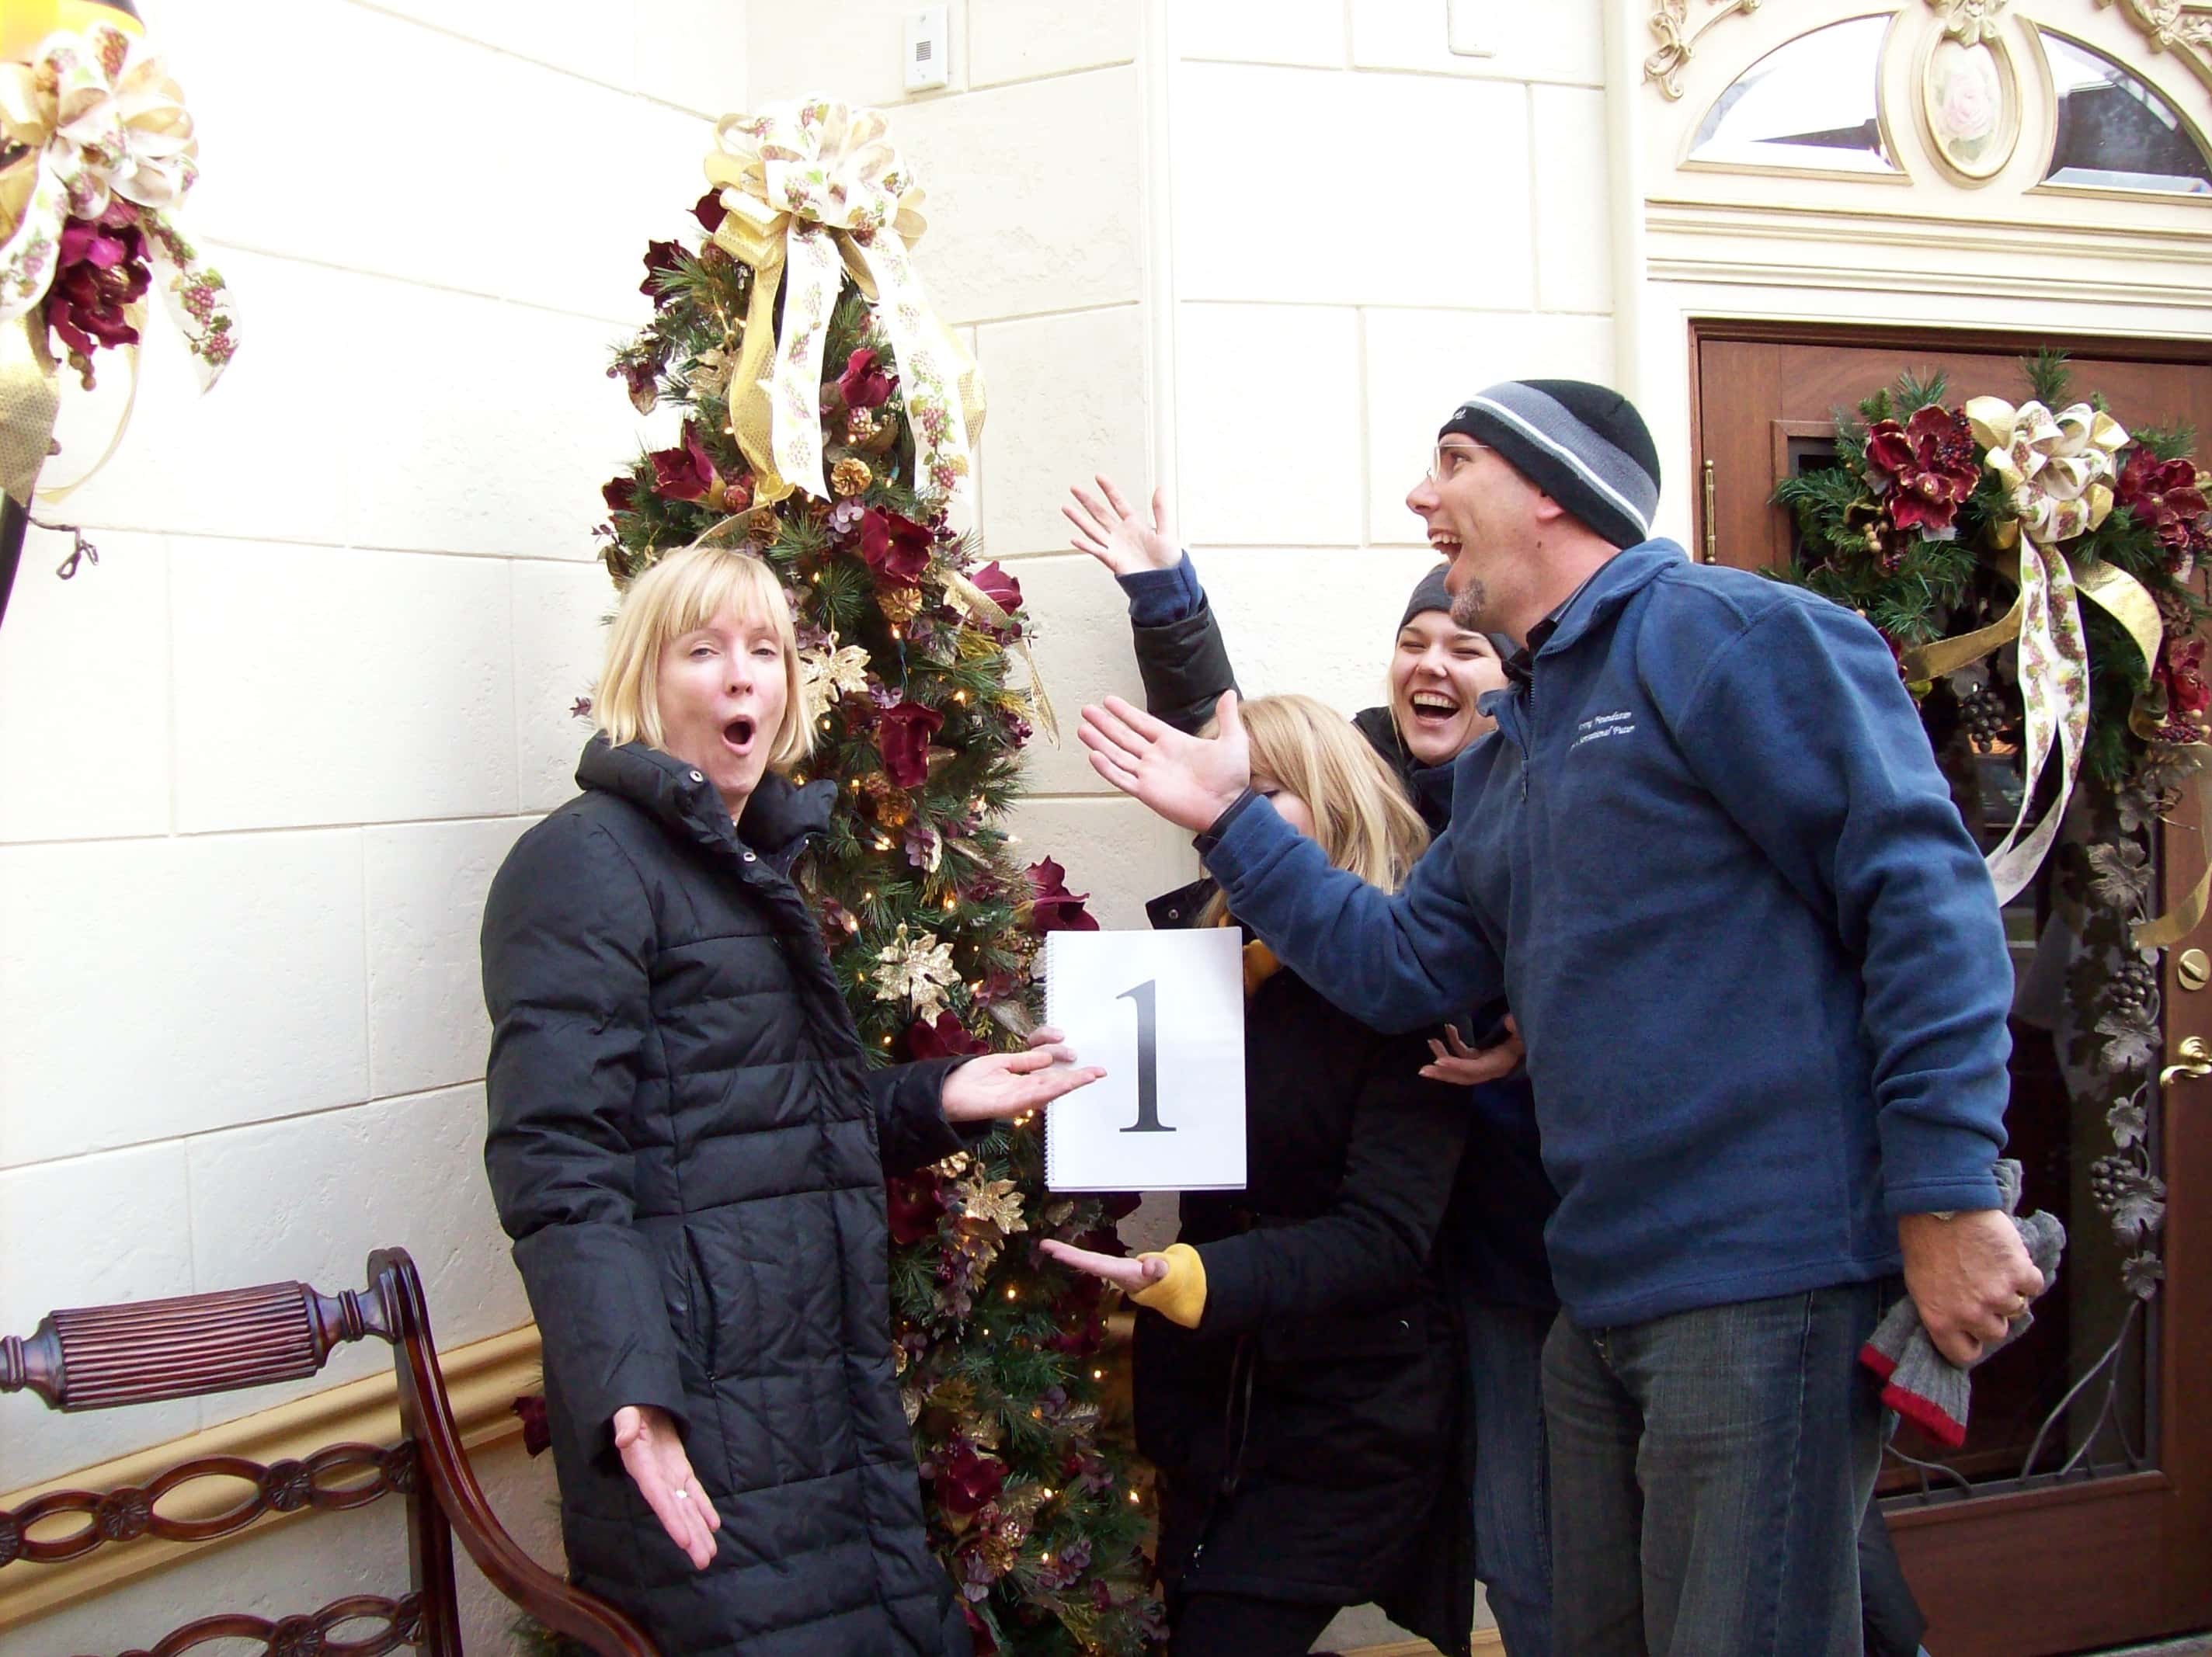 Group serenades a Christmas tree in Niagara-on-the-Lake